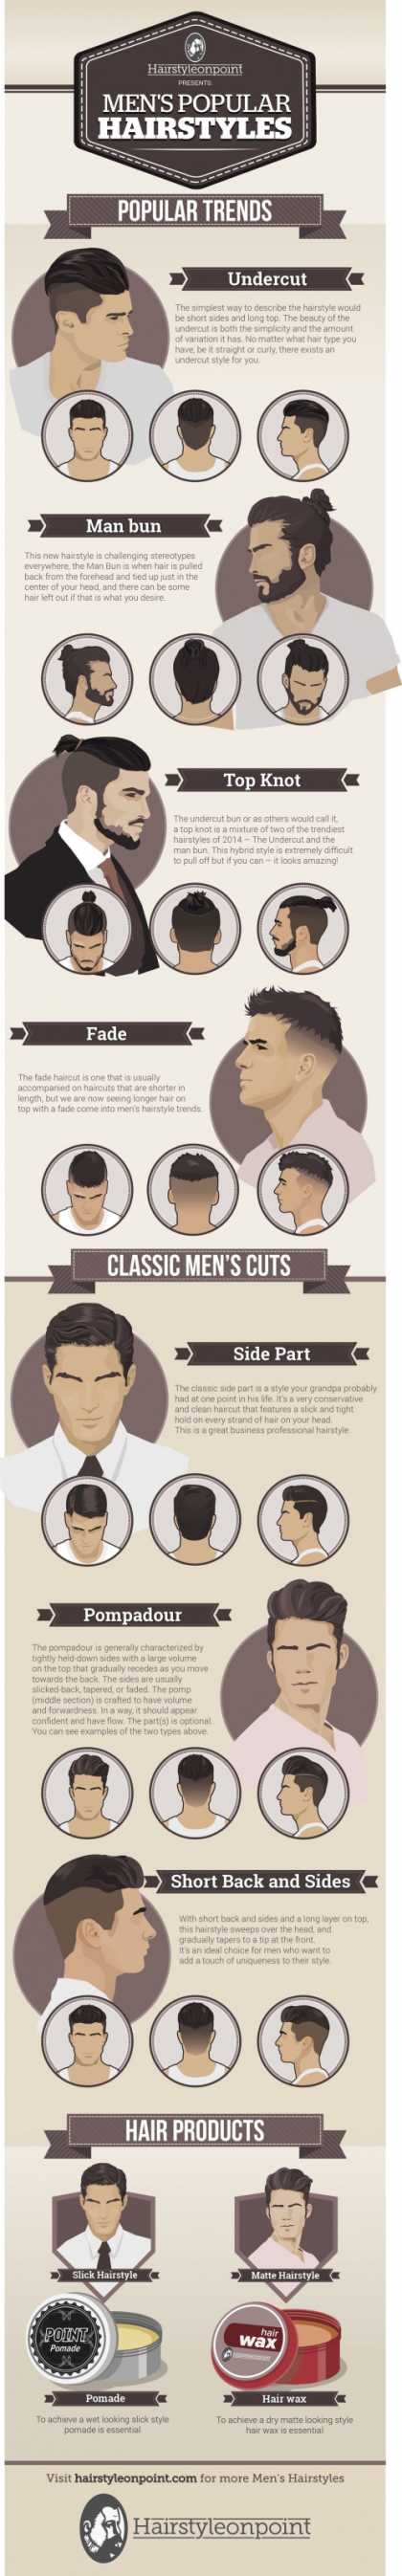 Men's Popular Hairstyles